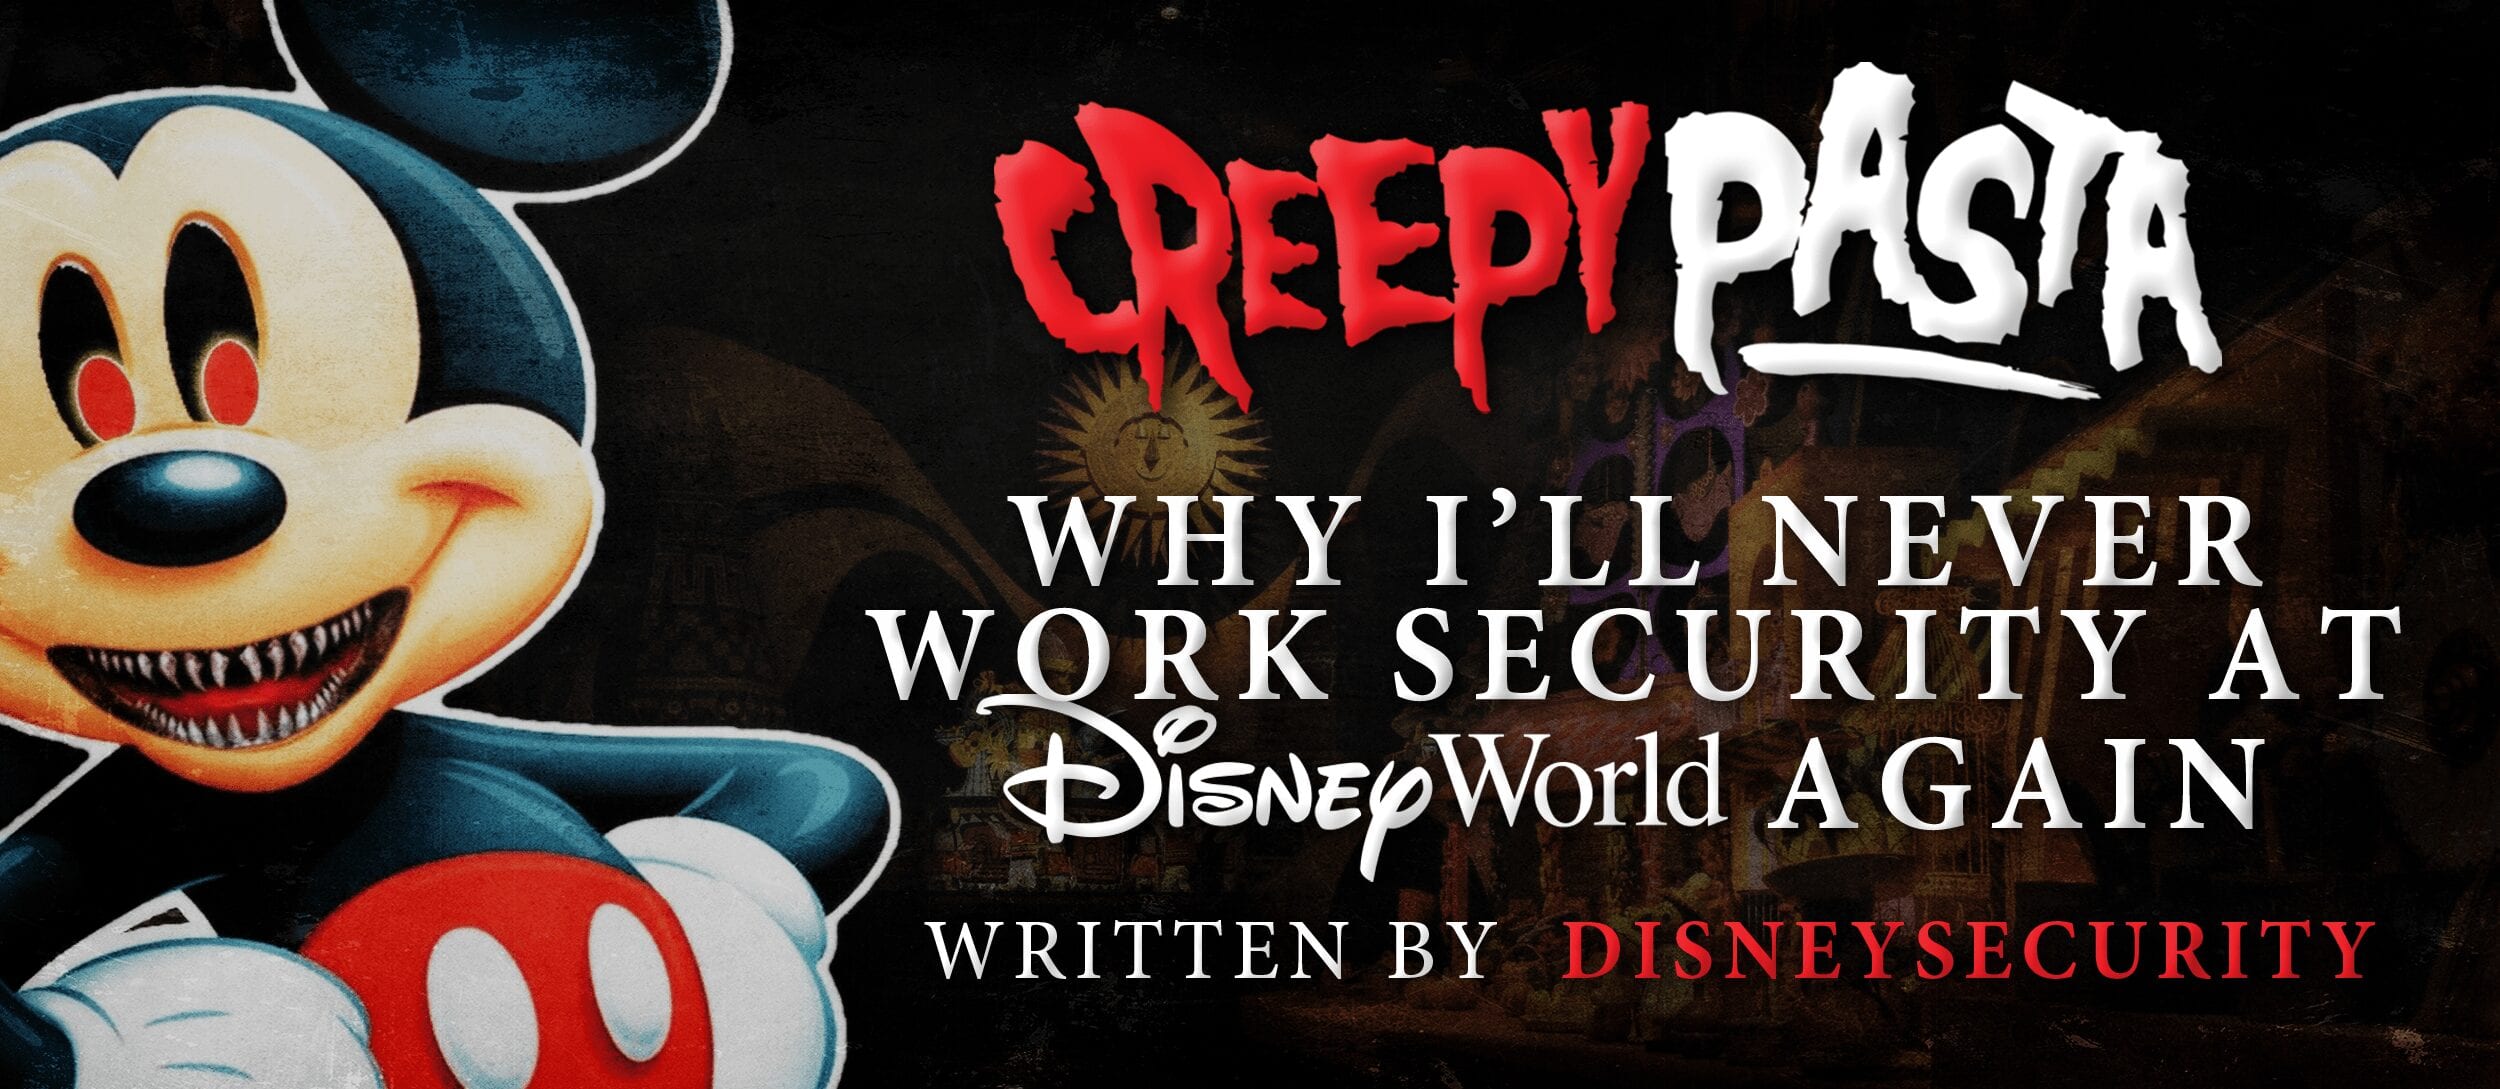 Disney Archives - Creepypasta